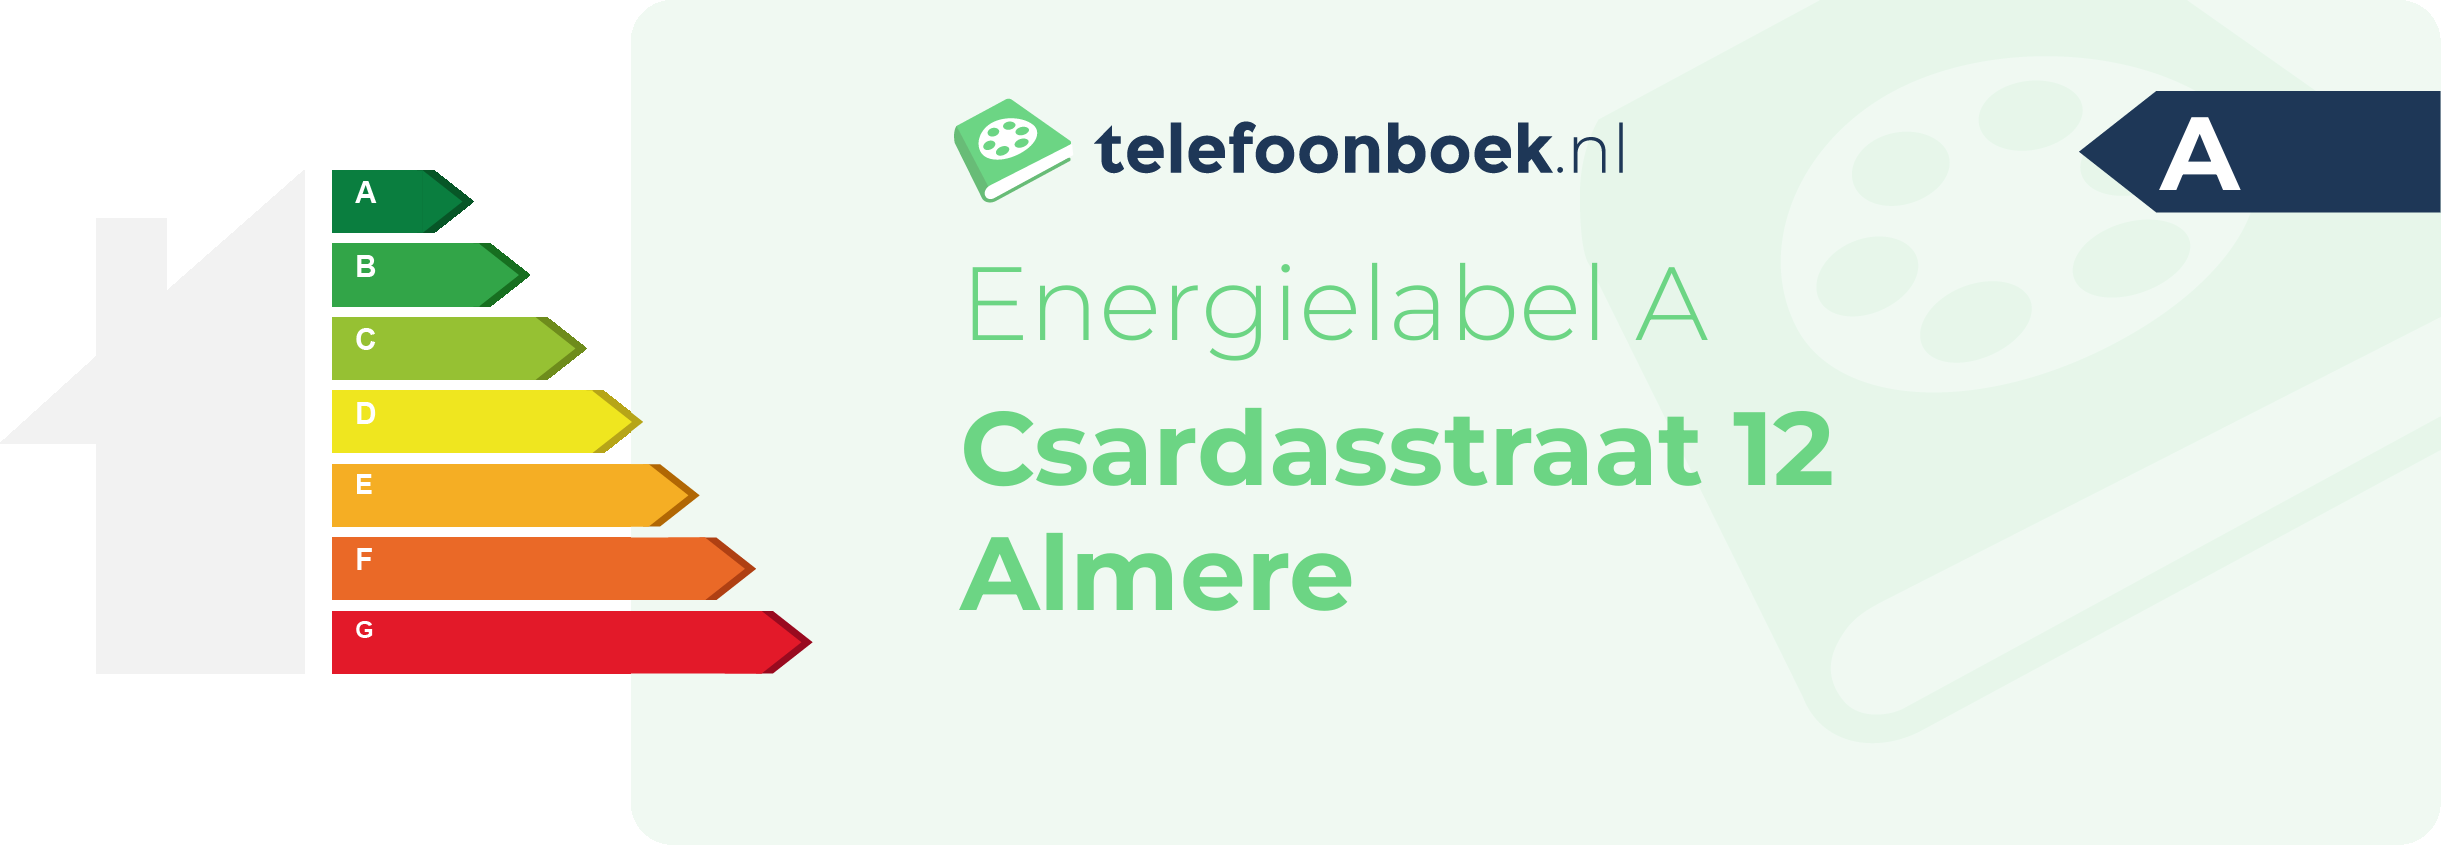 Energielabel Csardasstraat 12 Almere